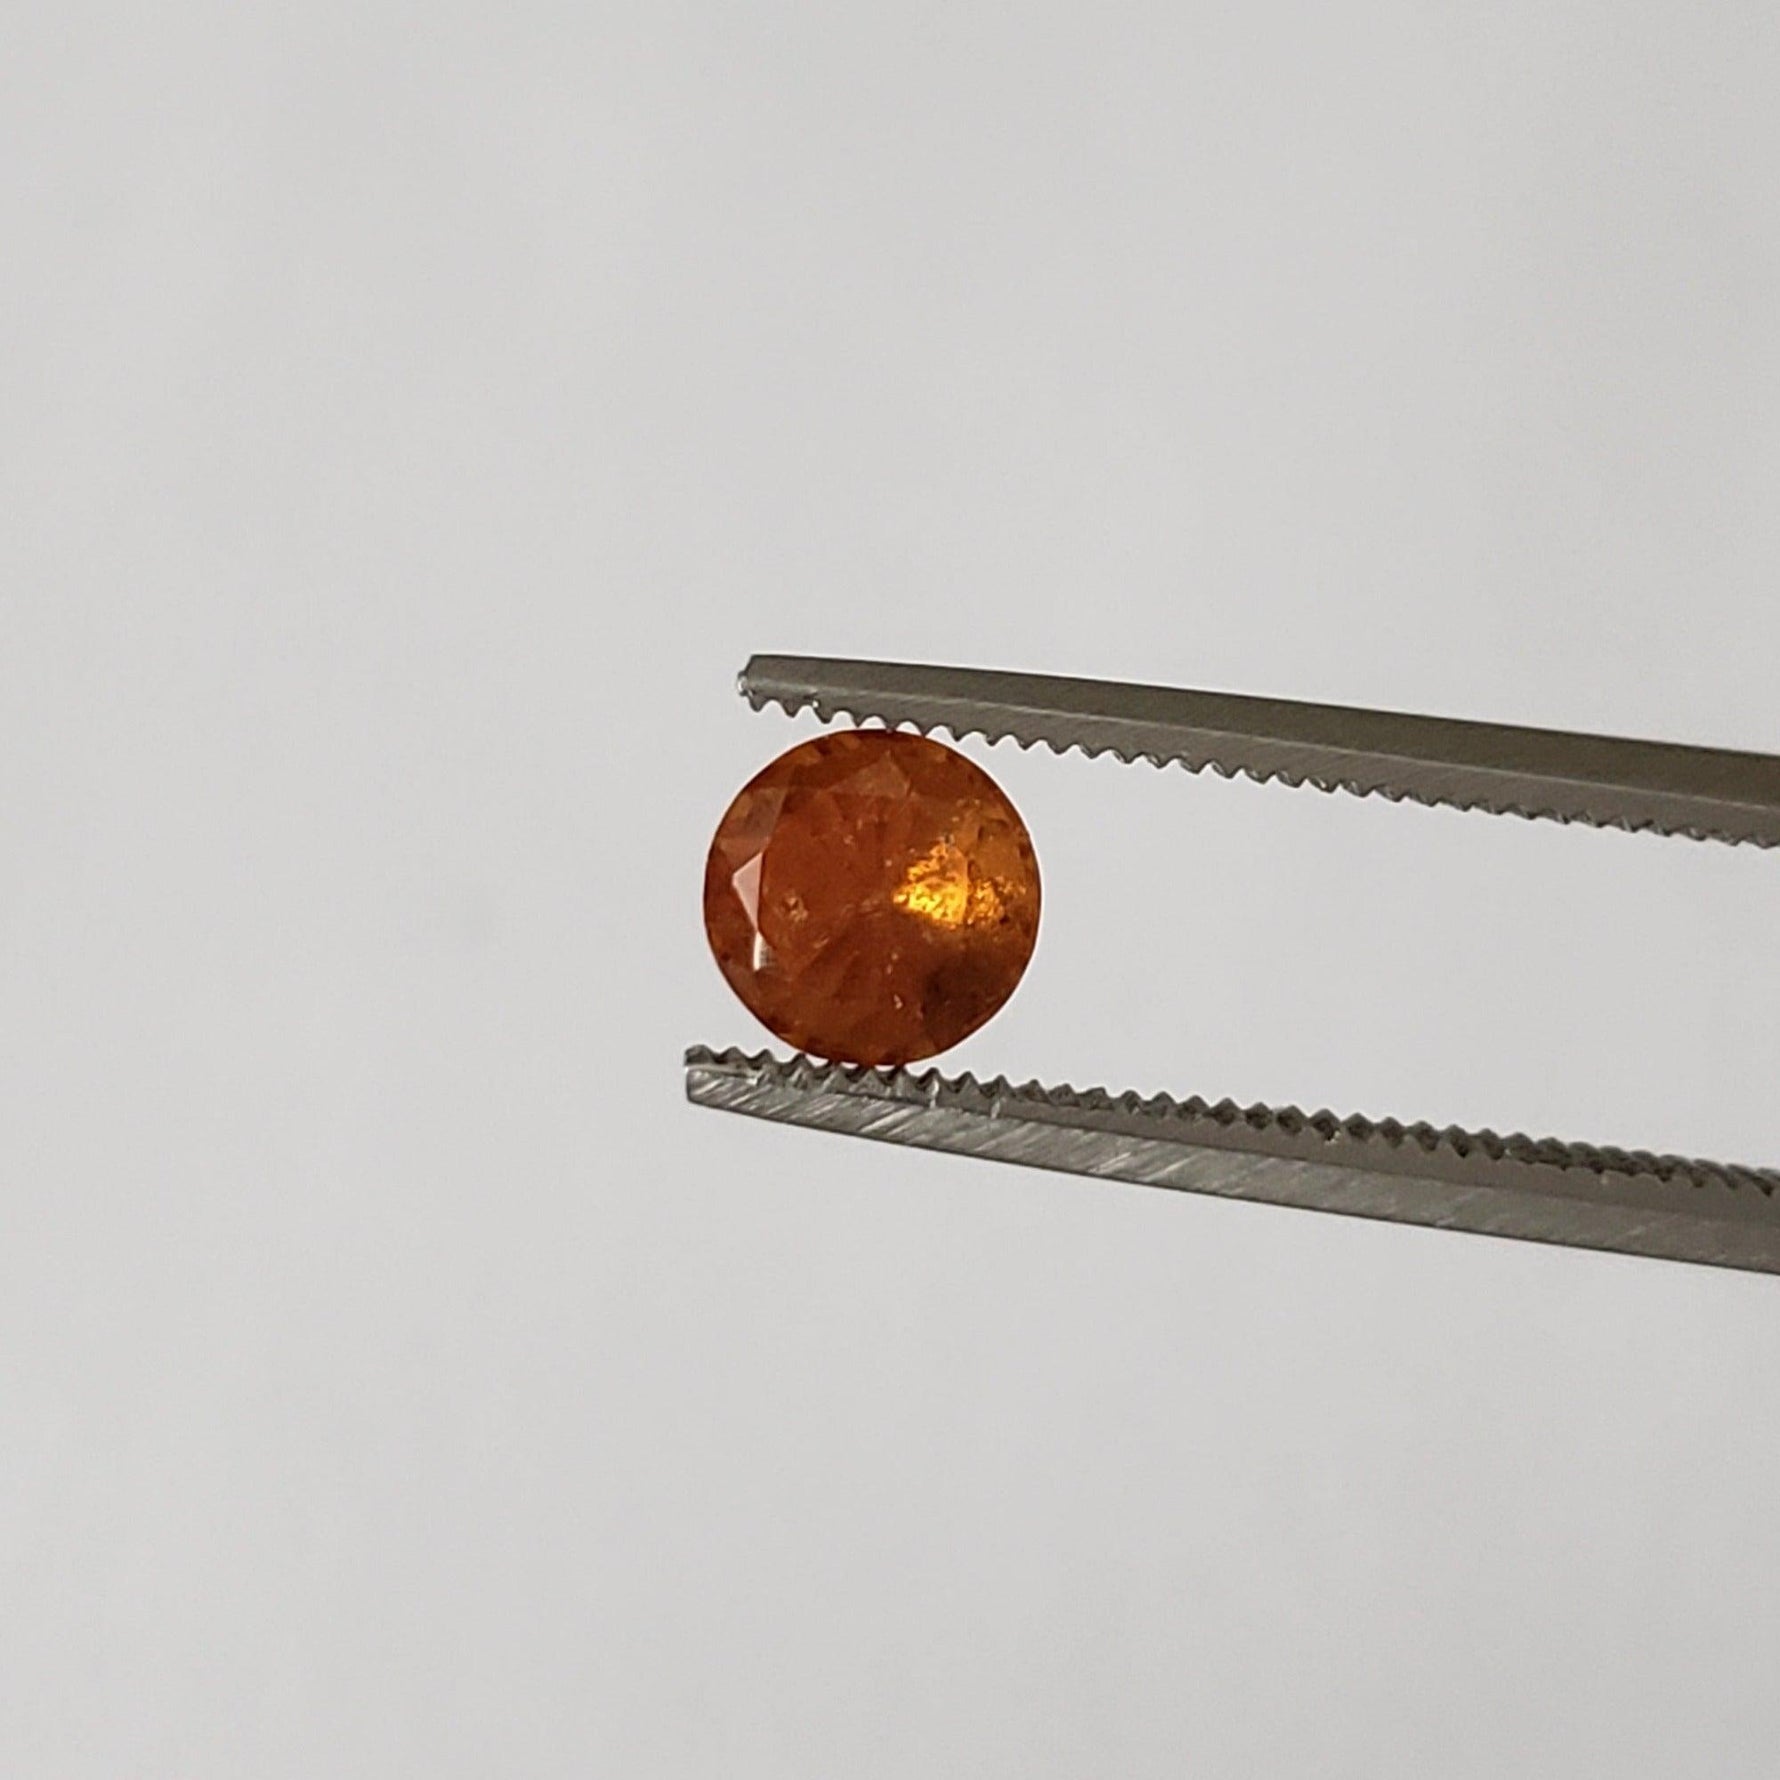 Hessonite Garnet | Unheated | Cinnamon Stone | Round Cut | Orange | 5.2mm 0.79ct | Madagascar | Canagem.com